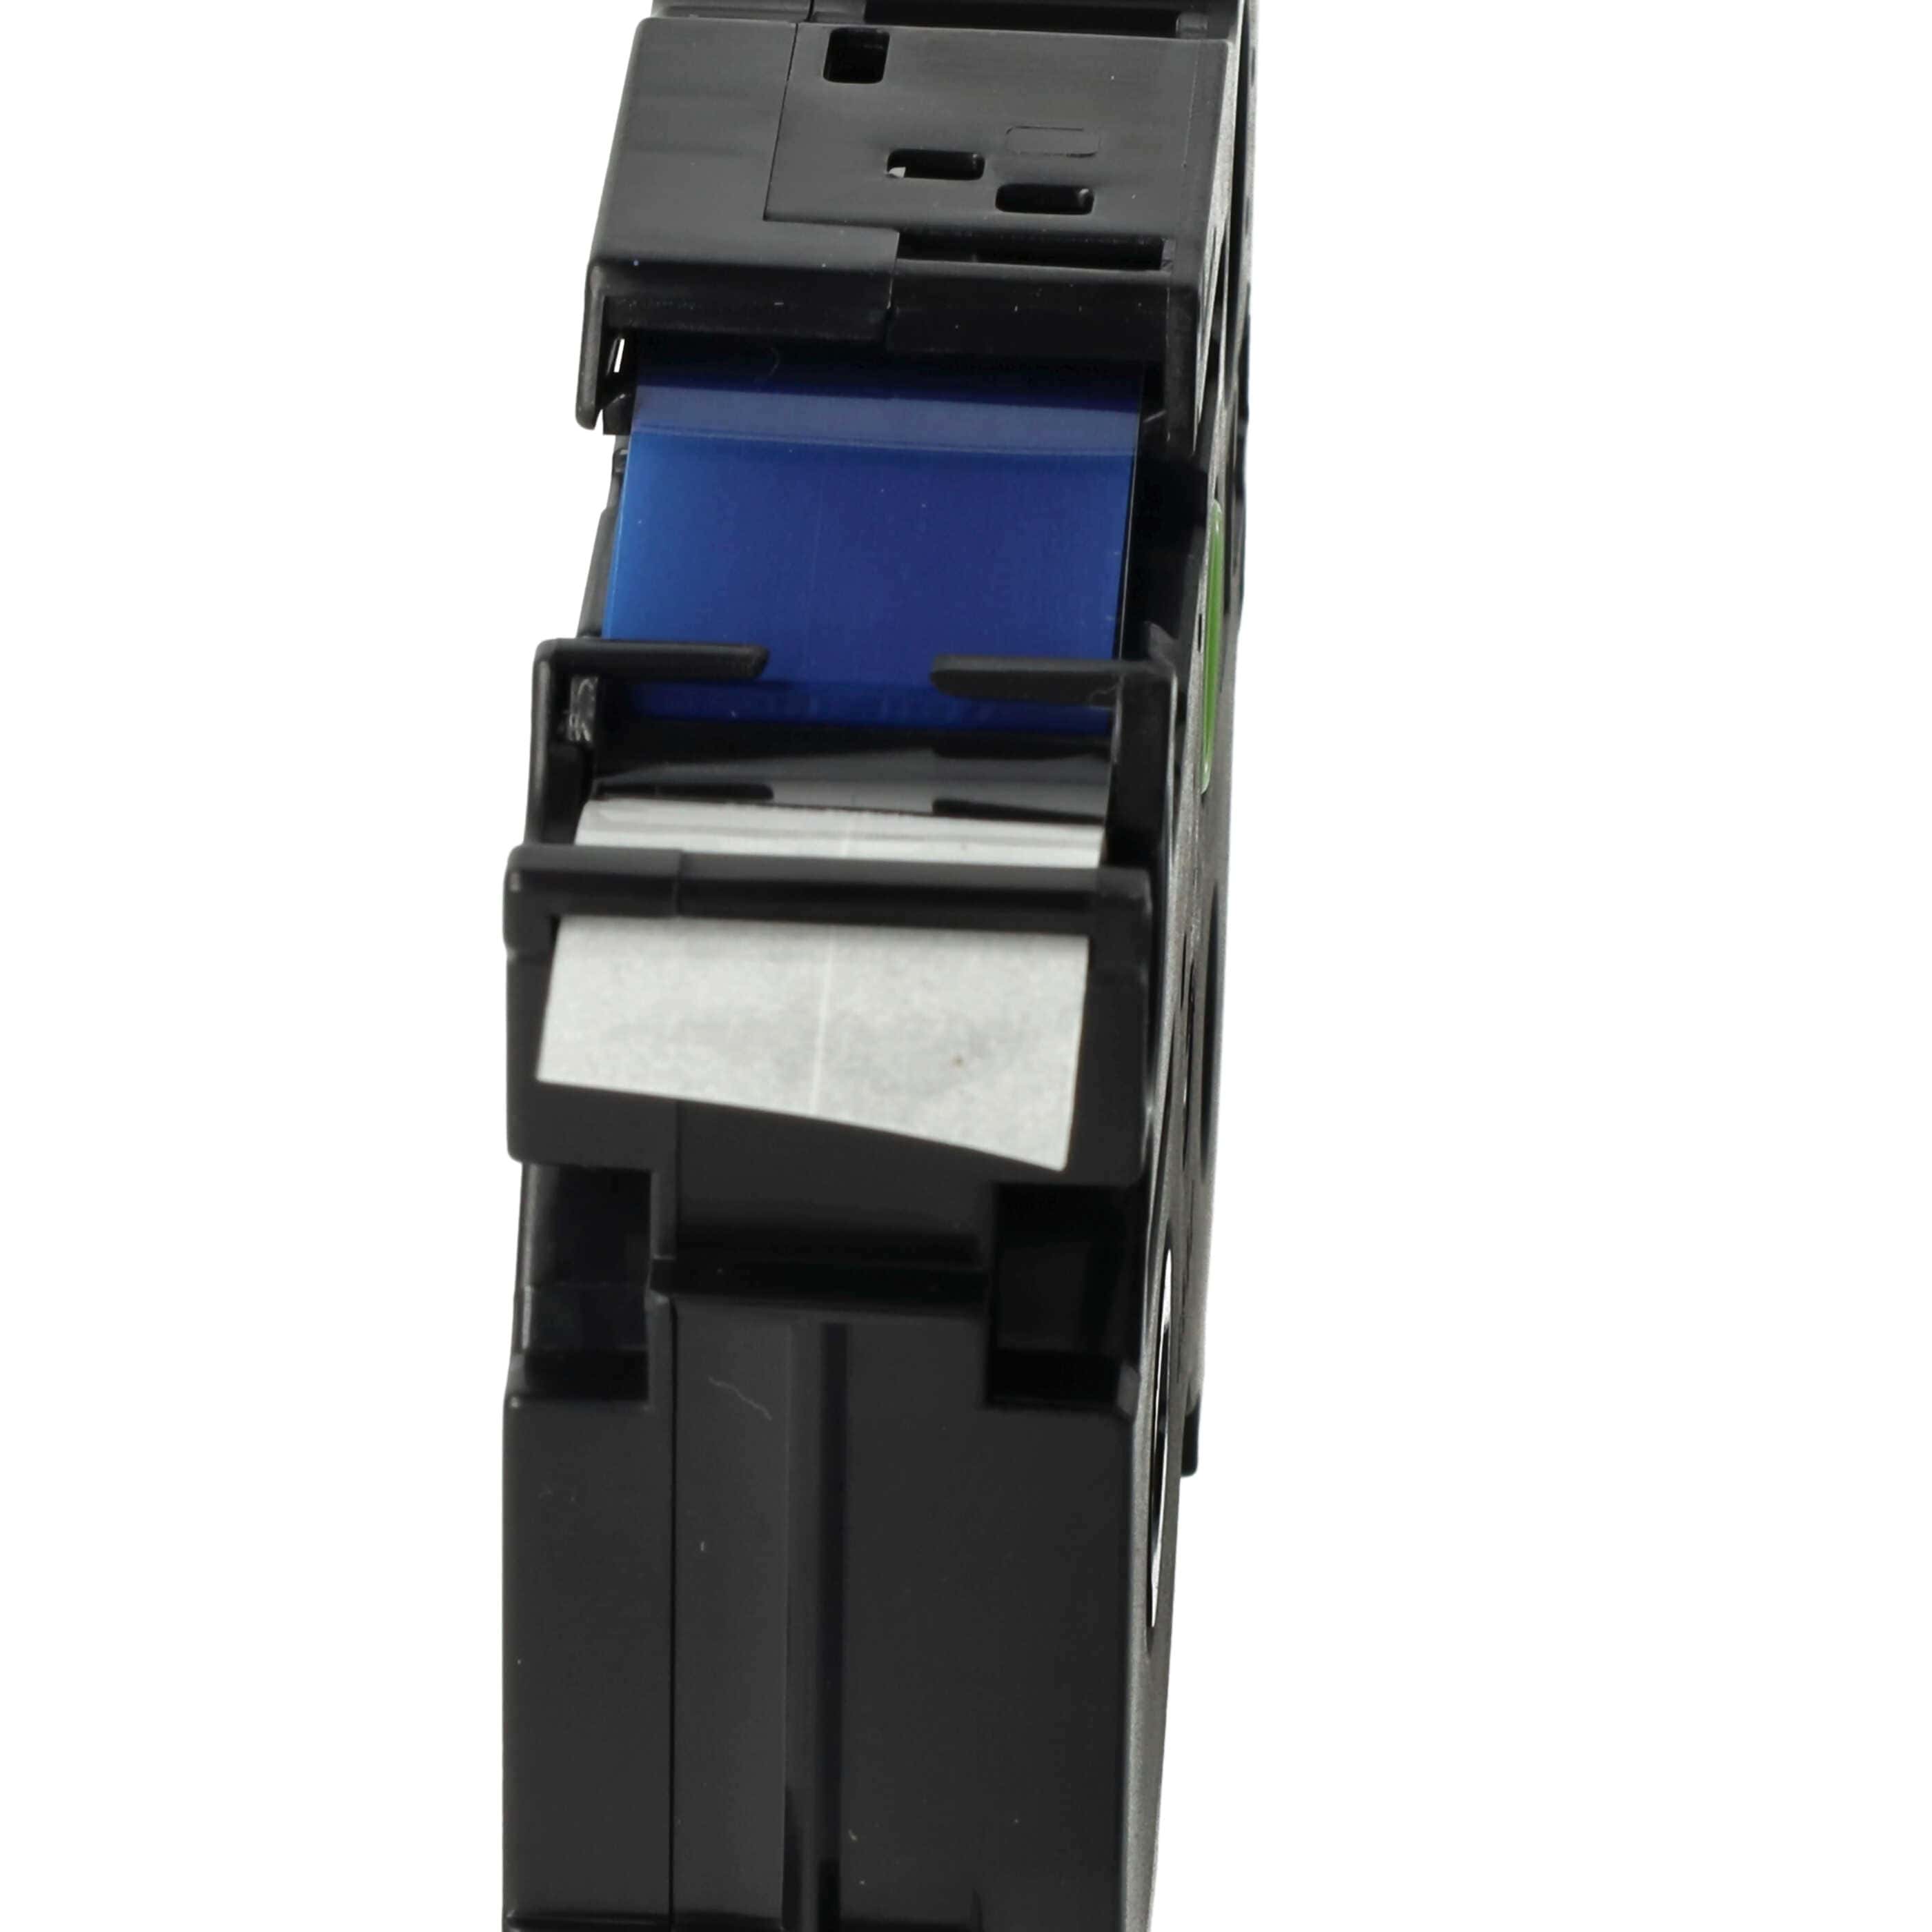 Casete cinta escritura reemplaza Brother TZE-143 Azul su Transparente